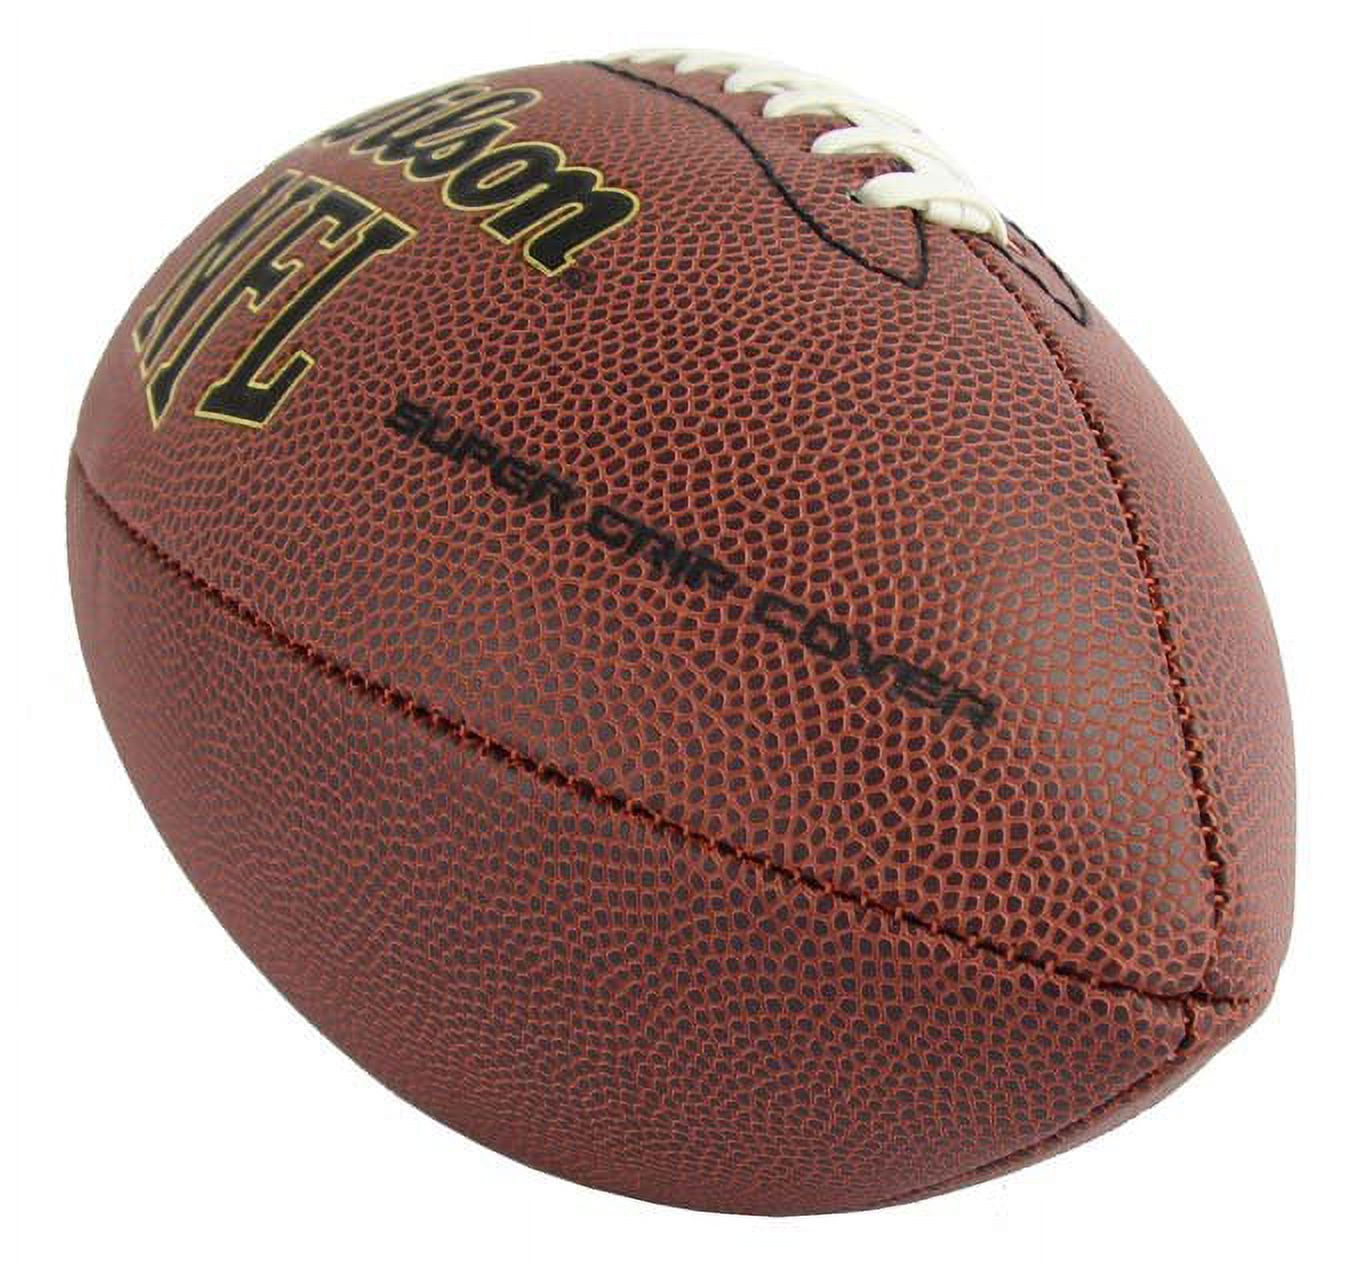 Wilson NFL Super Grip Football - image 3 of 6